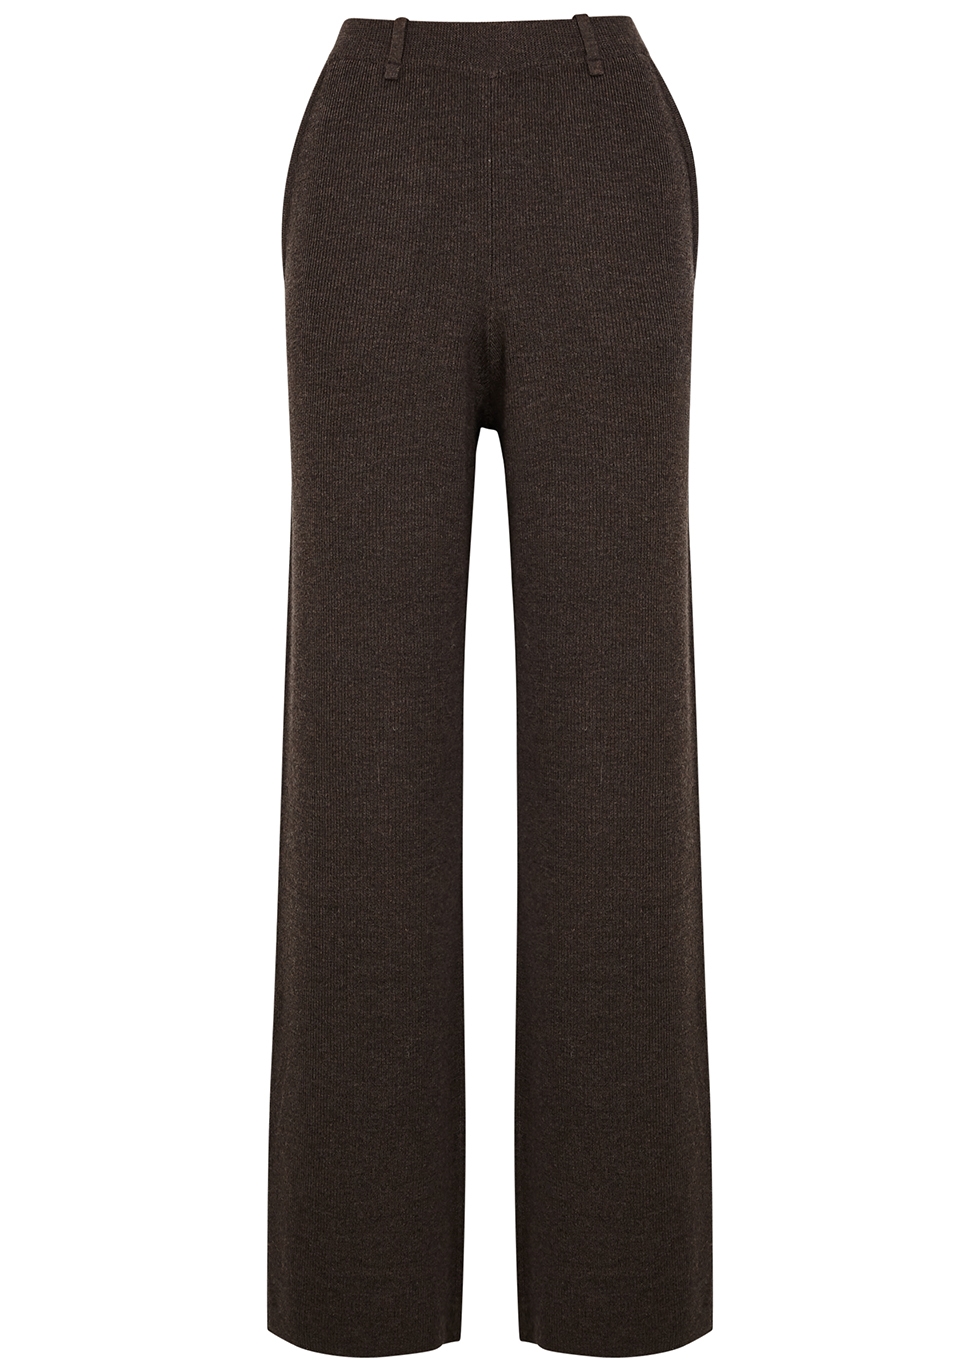 Karita brown wool trousers